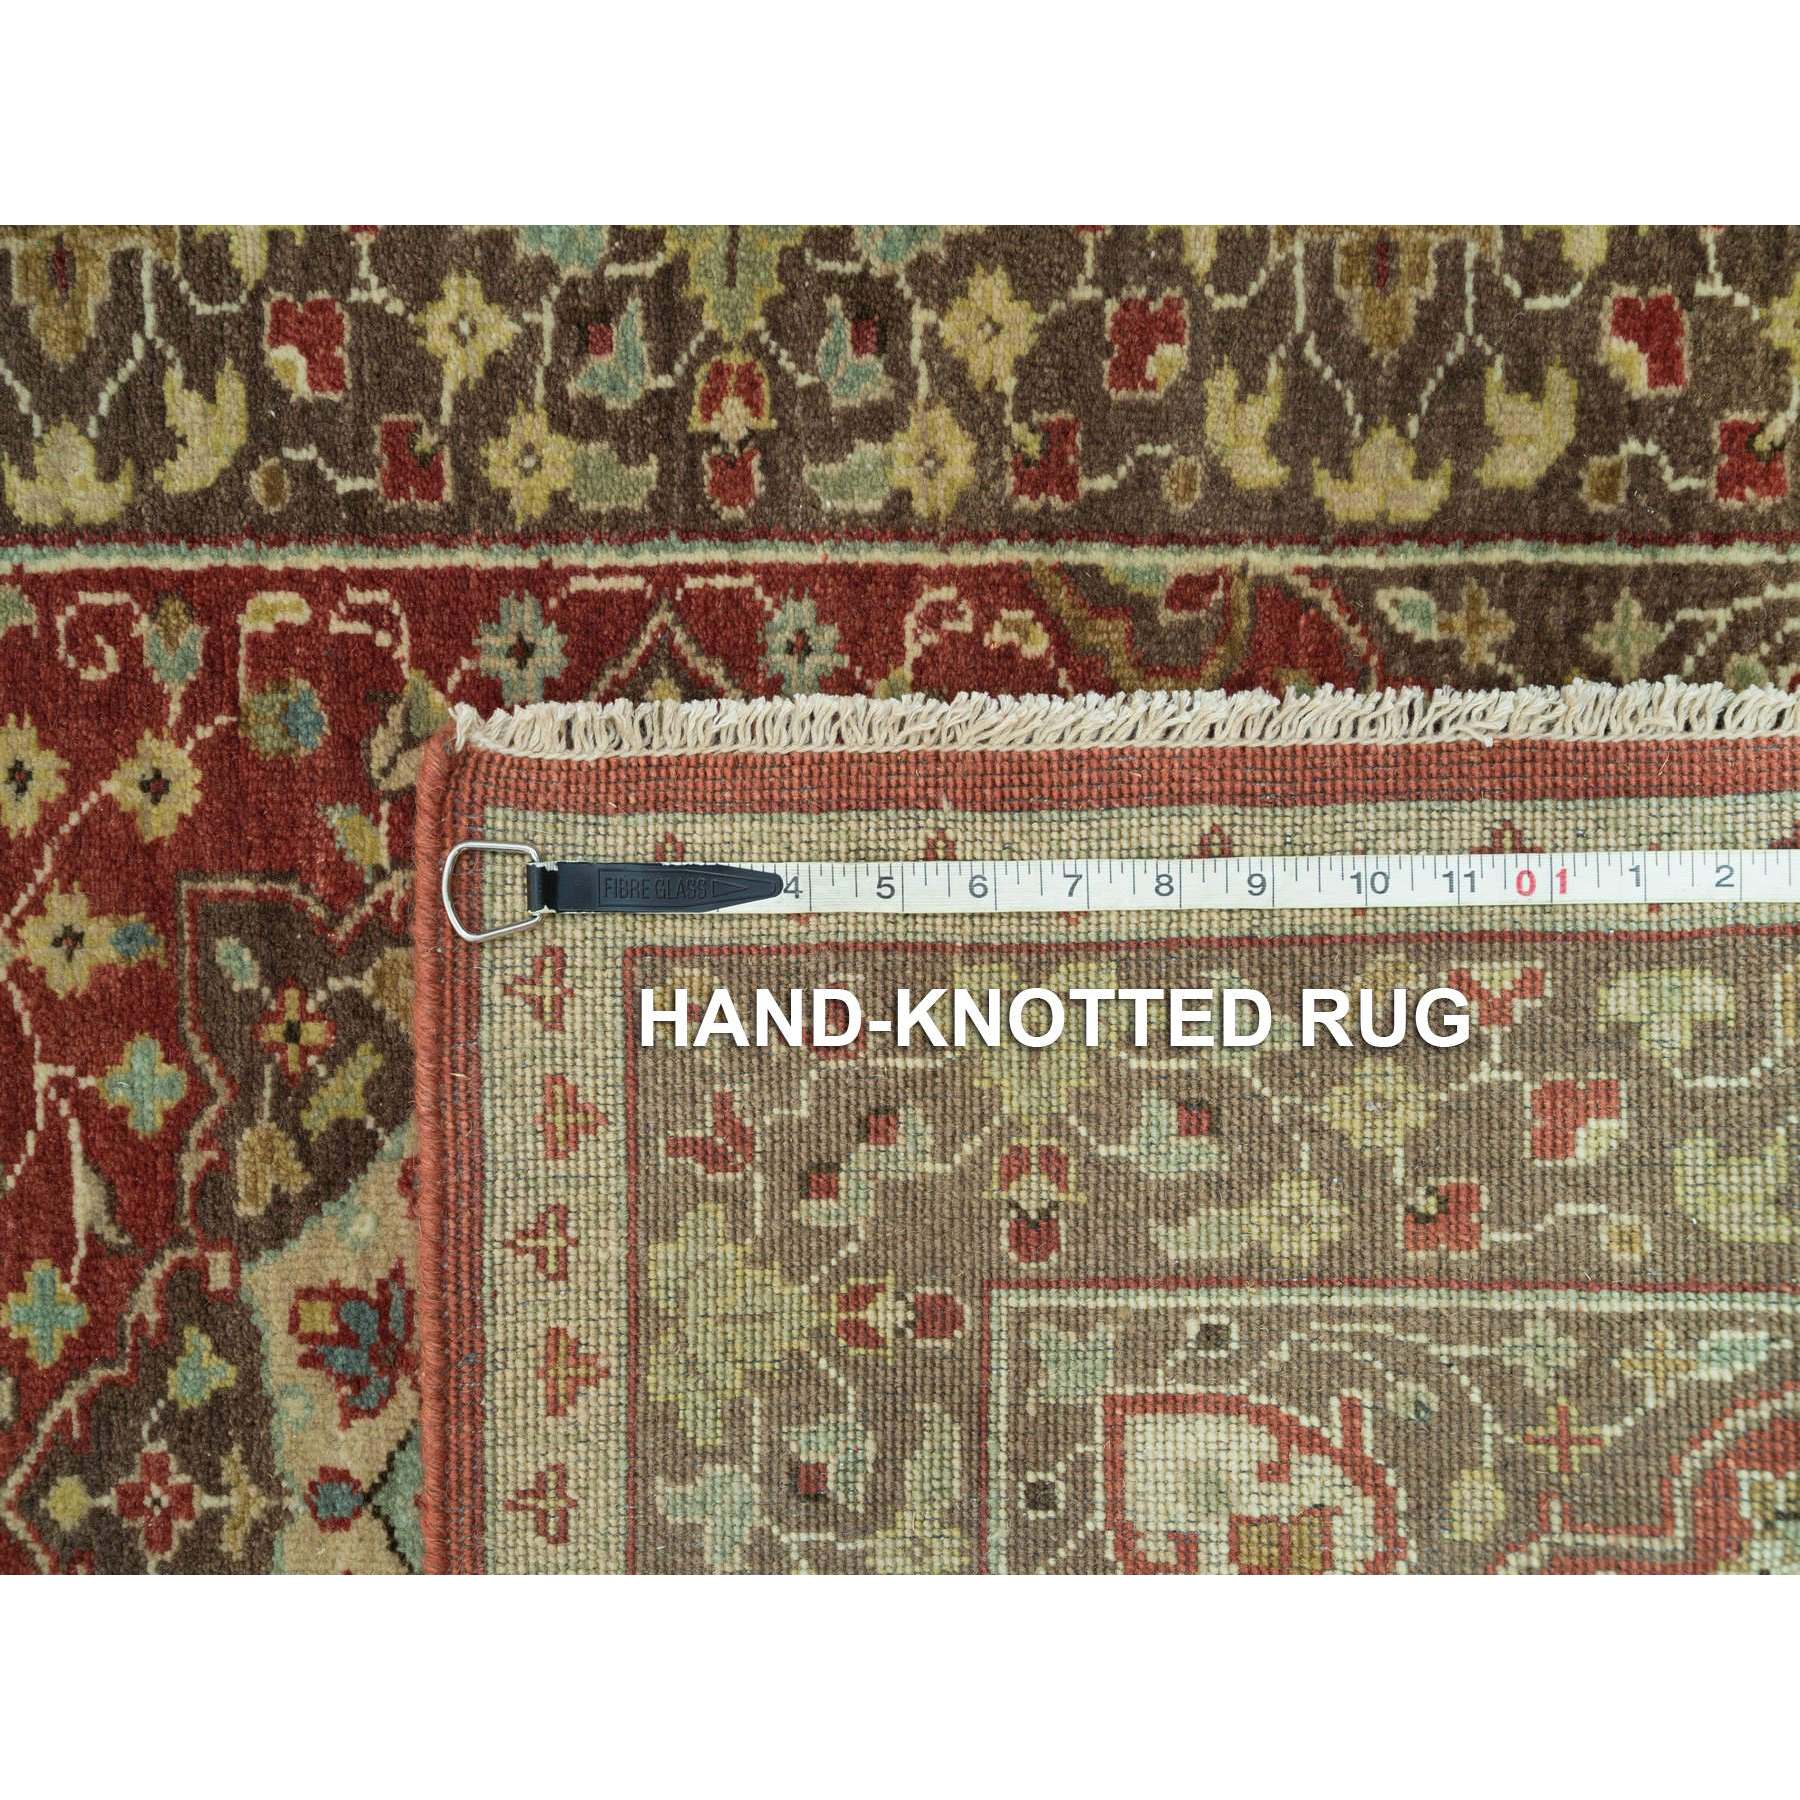 2'8"x16' Turkey Red, Plush Pile, Antiqued Tabriz Haji Jalili Design, Hand Woven, 100% Wool, Natural Dyes, Dense Weave, XL Runner Oriental Rug 